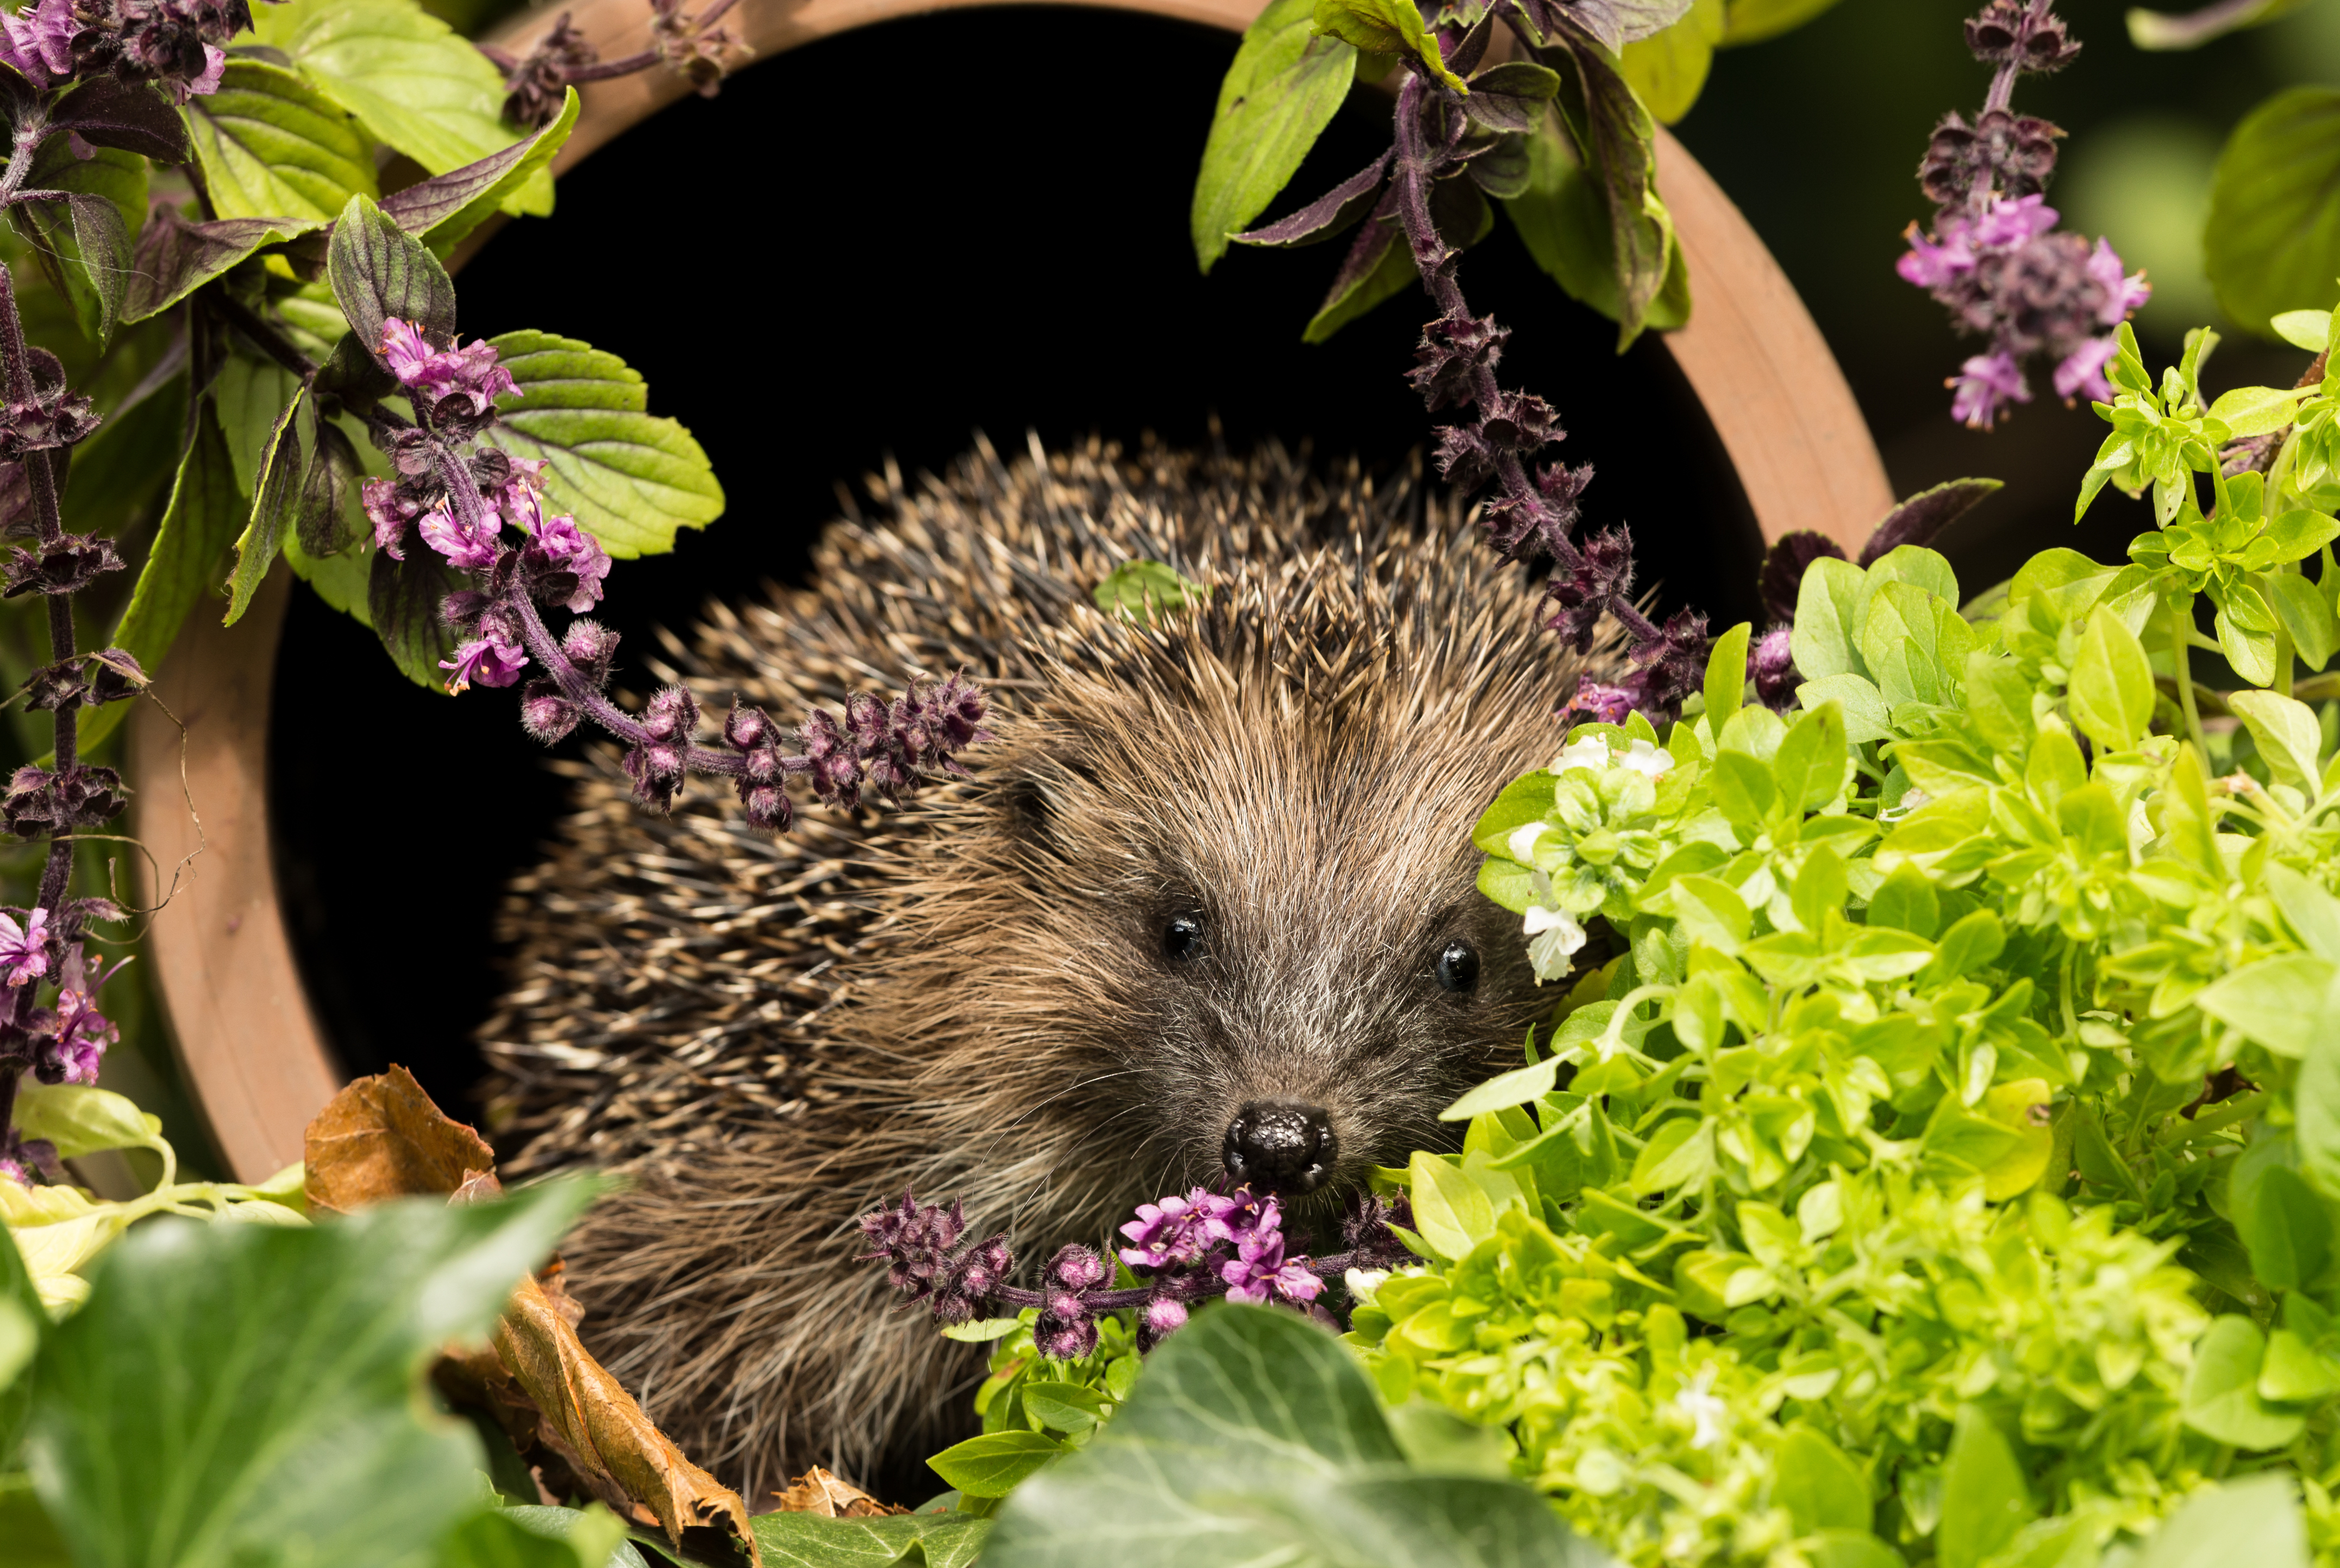 Image of a hedgehog in a garden